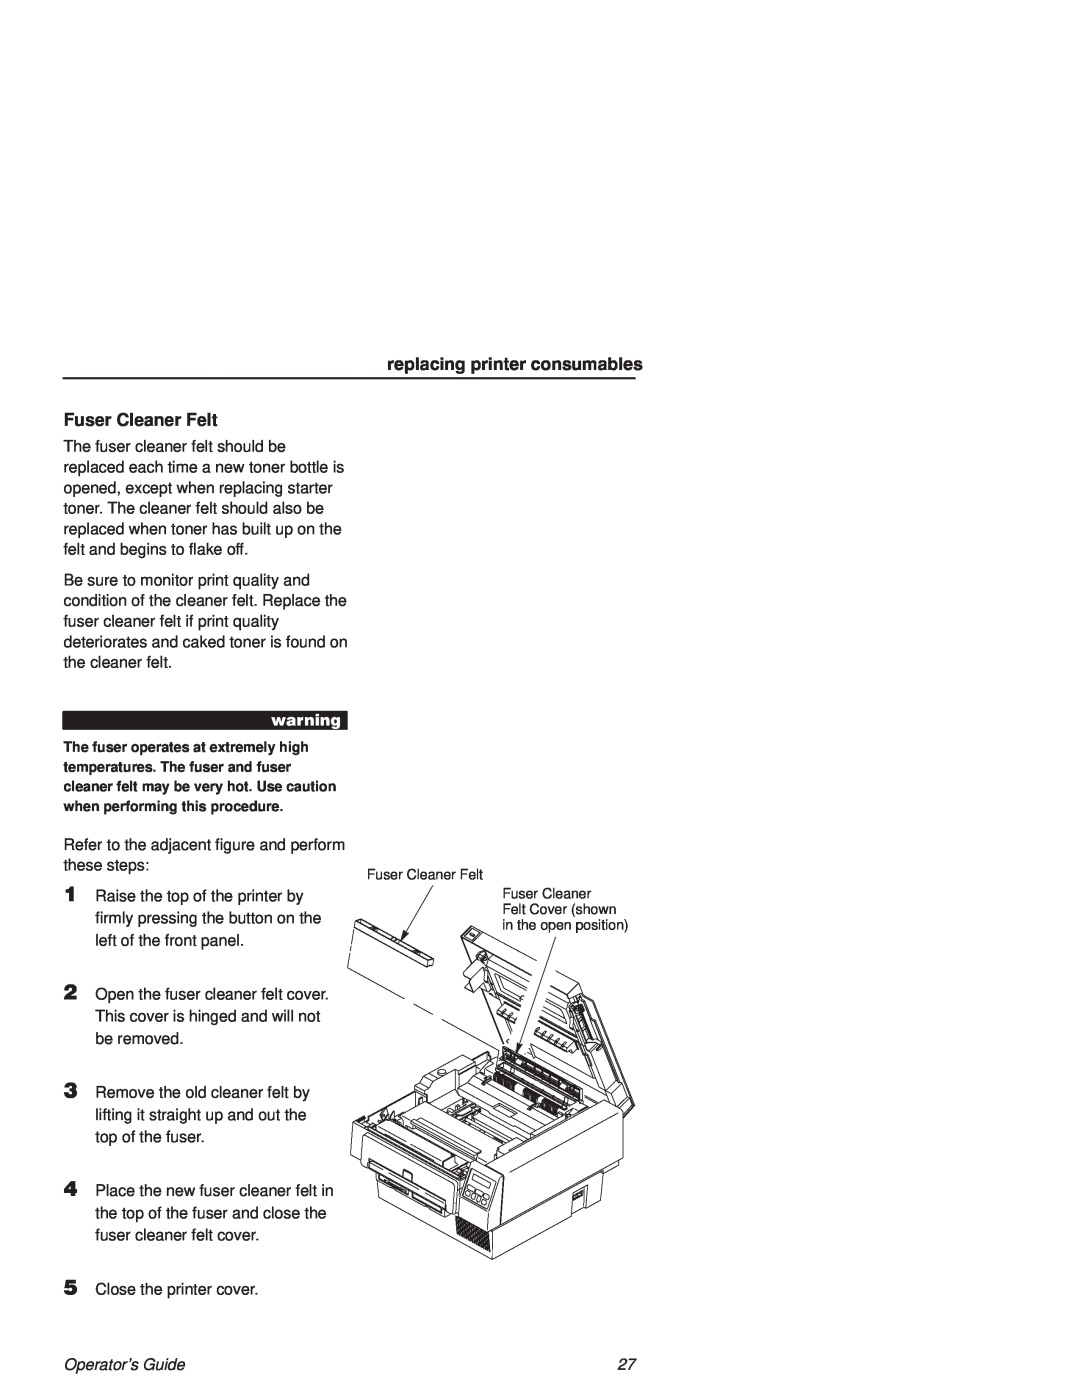 Printronix L1524 manual replacing printer consumables, Fuser Cleaner Felt, Operators Guide 